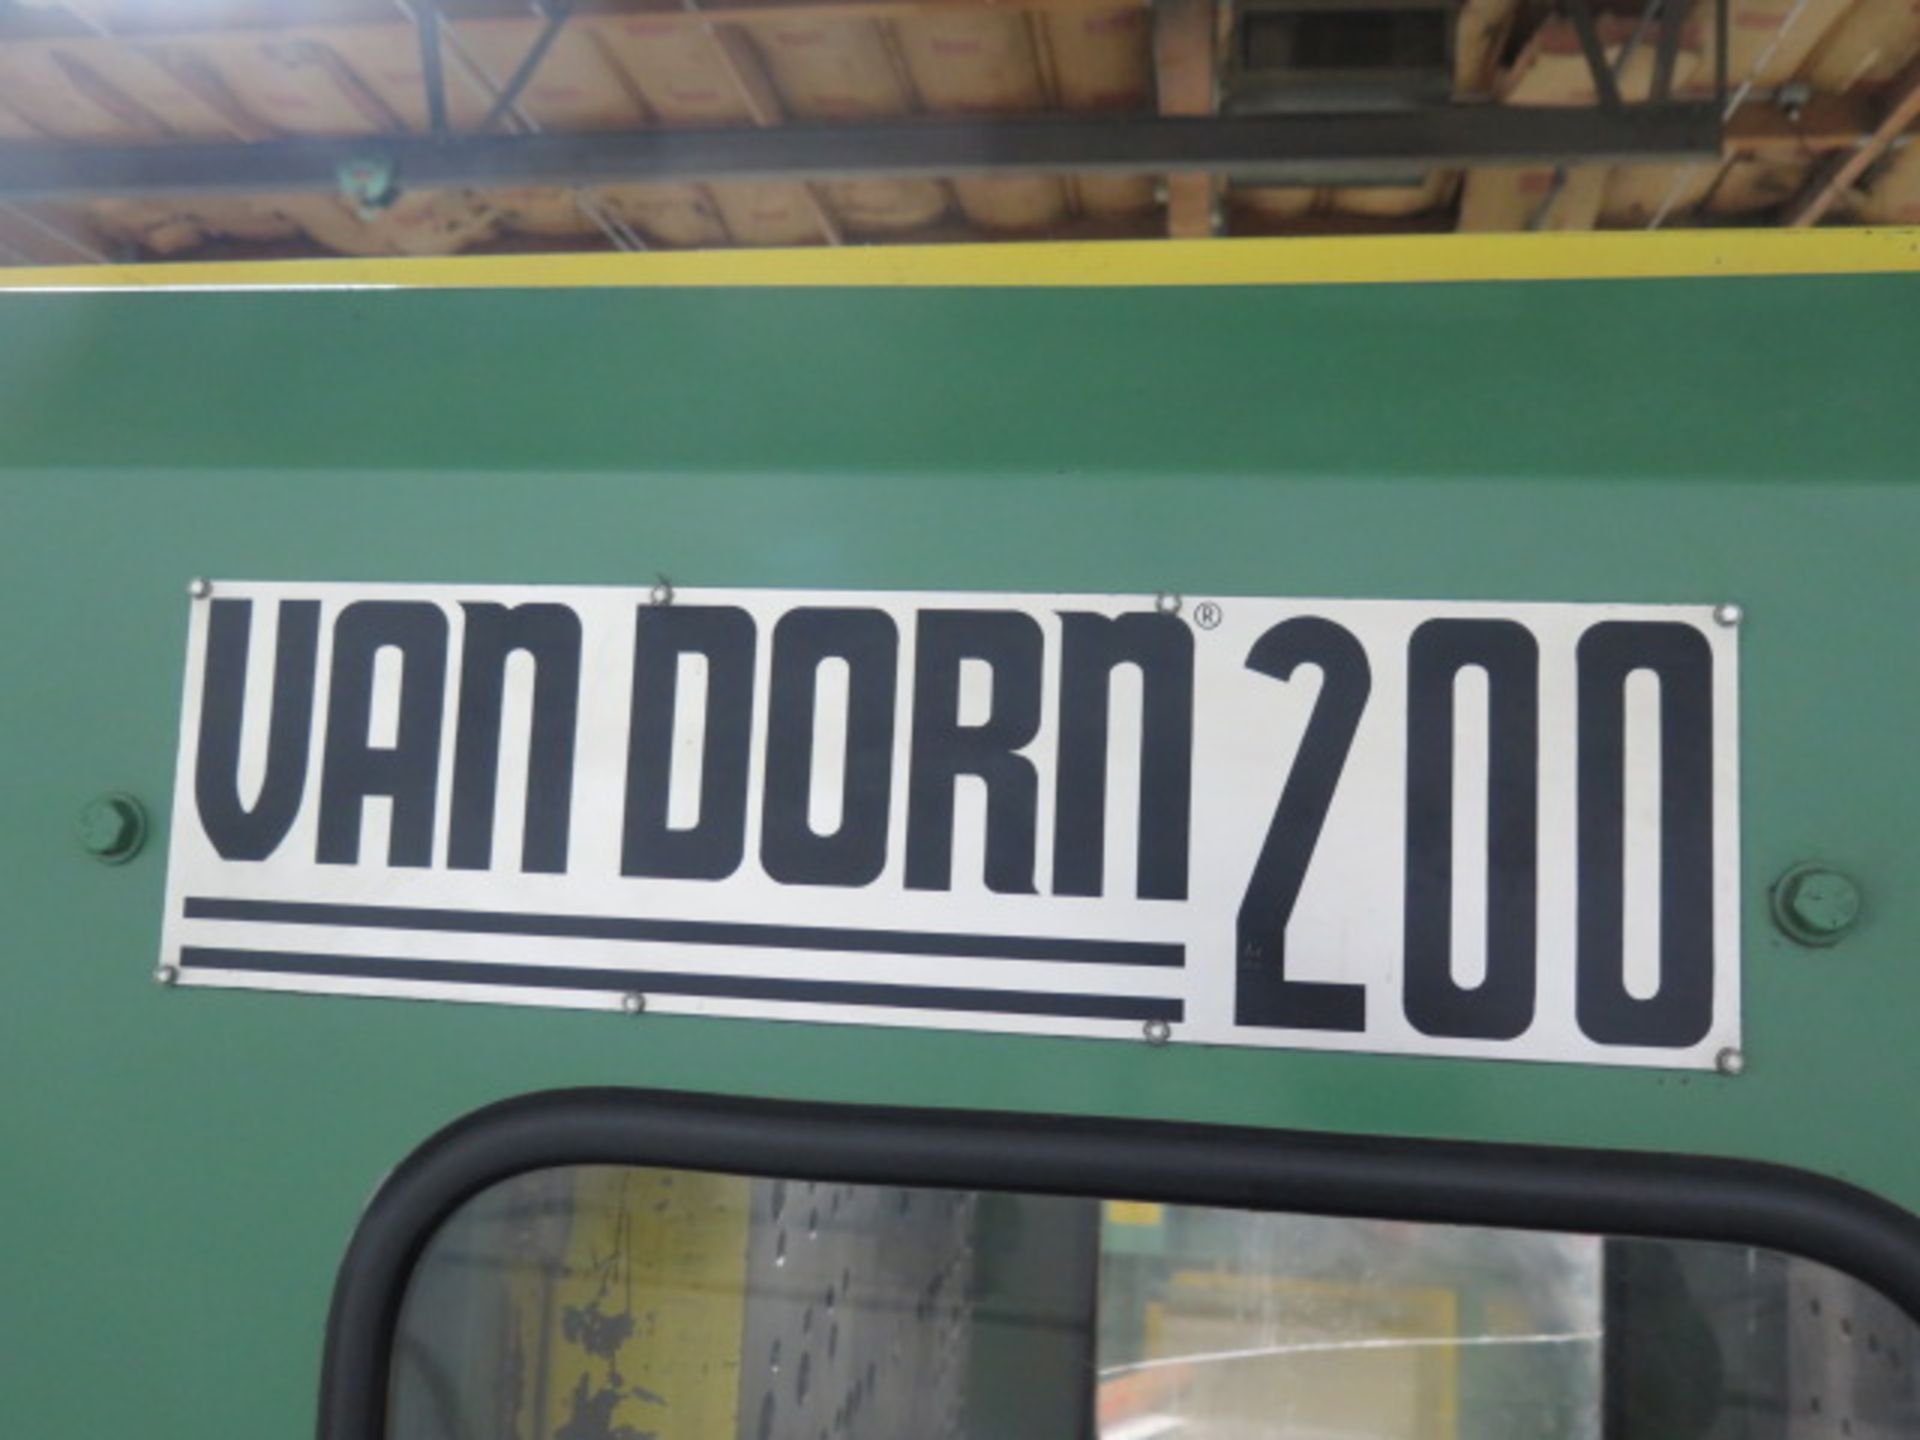 Van Dorn 200-RS-14F 200-Ton Plastic Injection Molding s/n 2255 w/ Van Dorn Controls, SOLD AS IS - Image 15 of 16